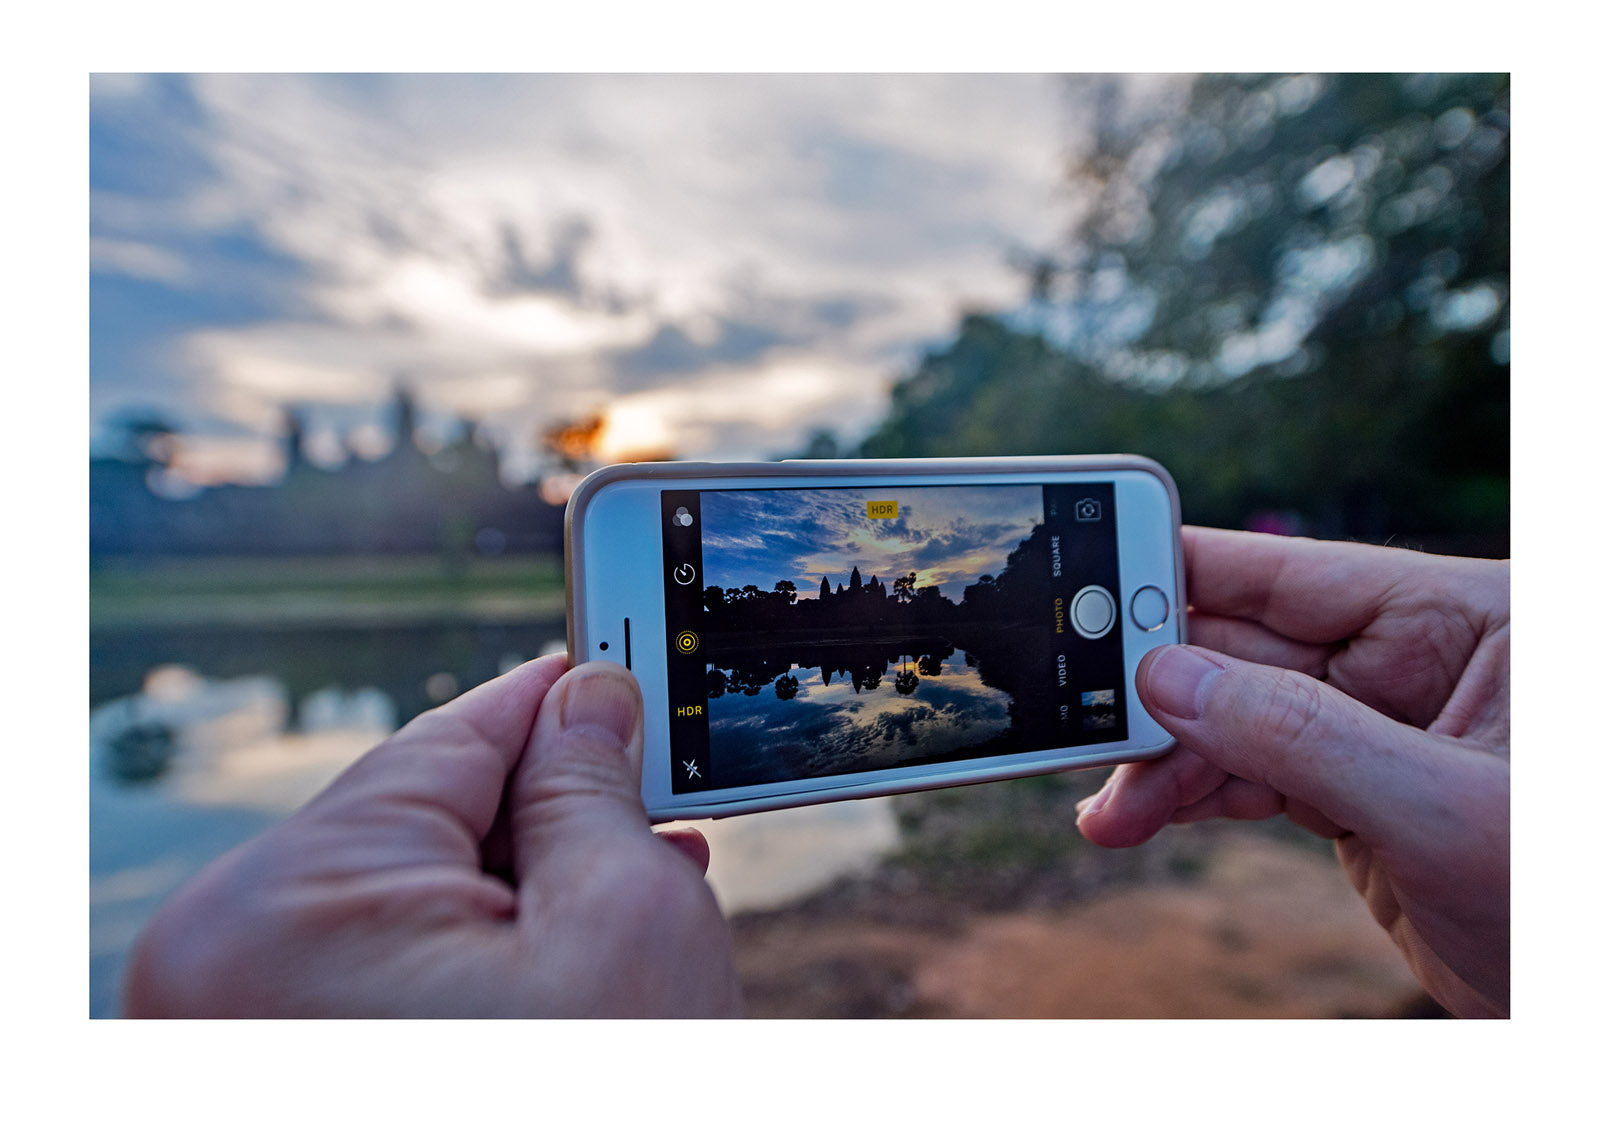 A tourist takes a photo of the ancient ruins of Angkor Wat at dawn using a smart phone. Angkor Wat, Siem Reap, Cambodia.